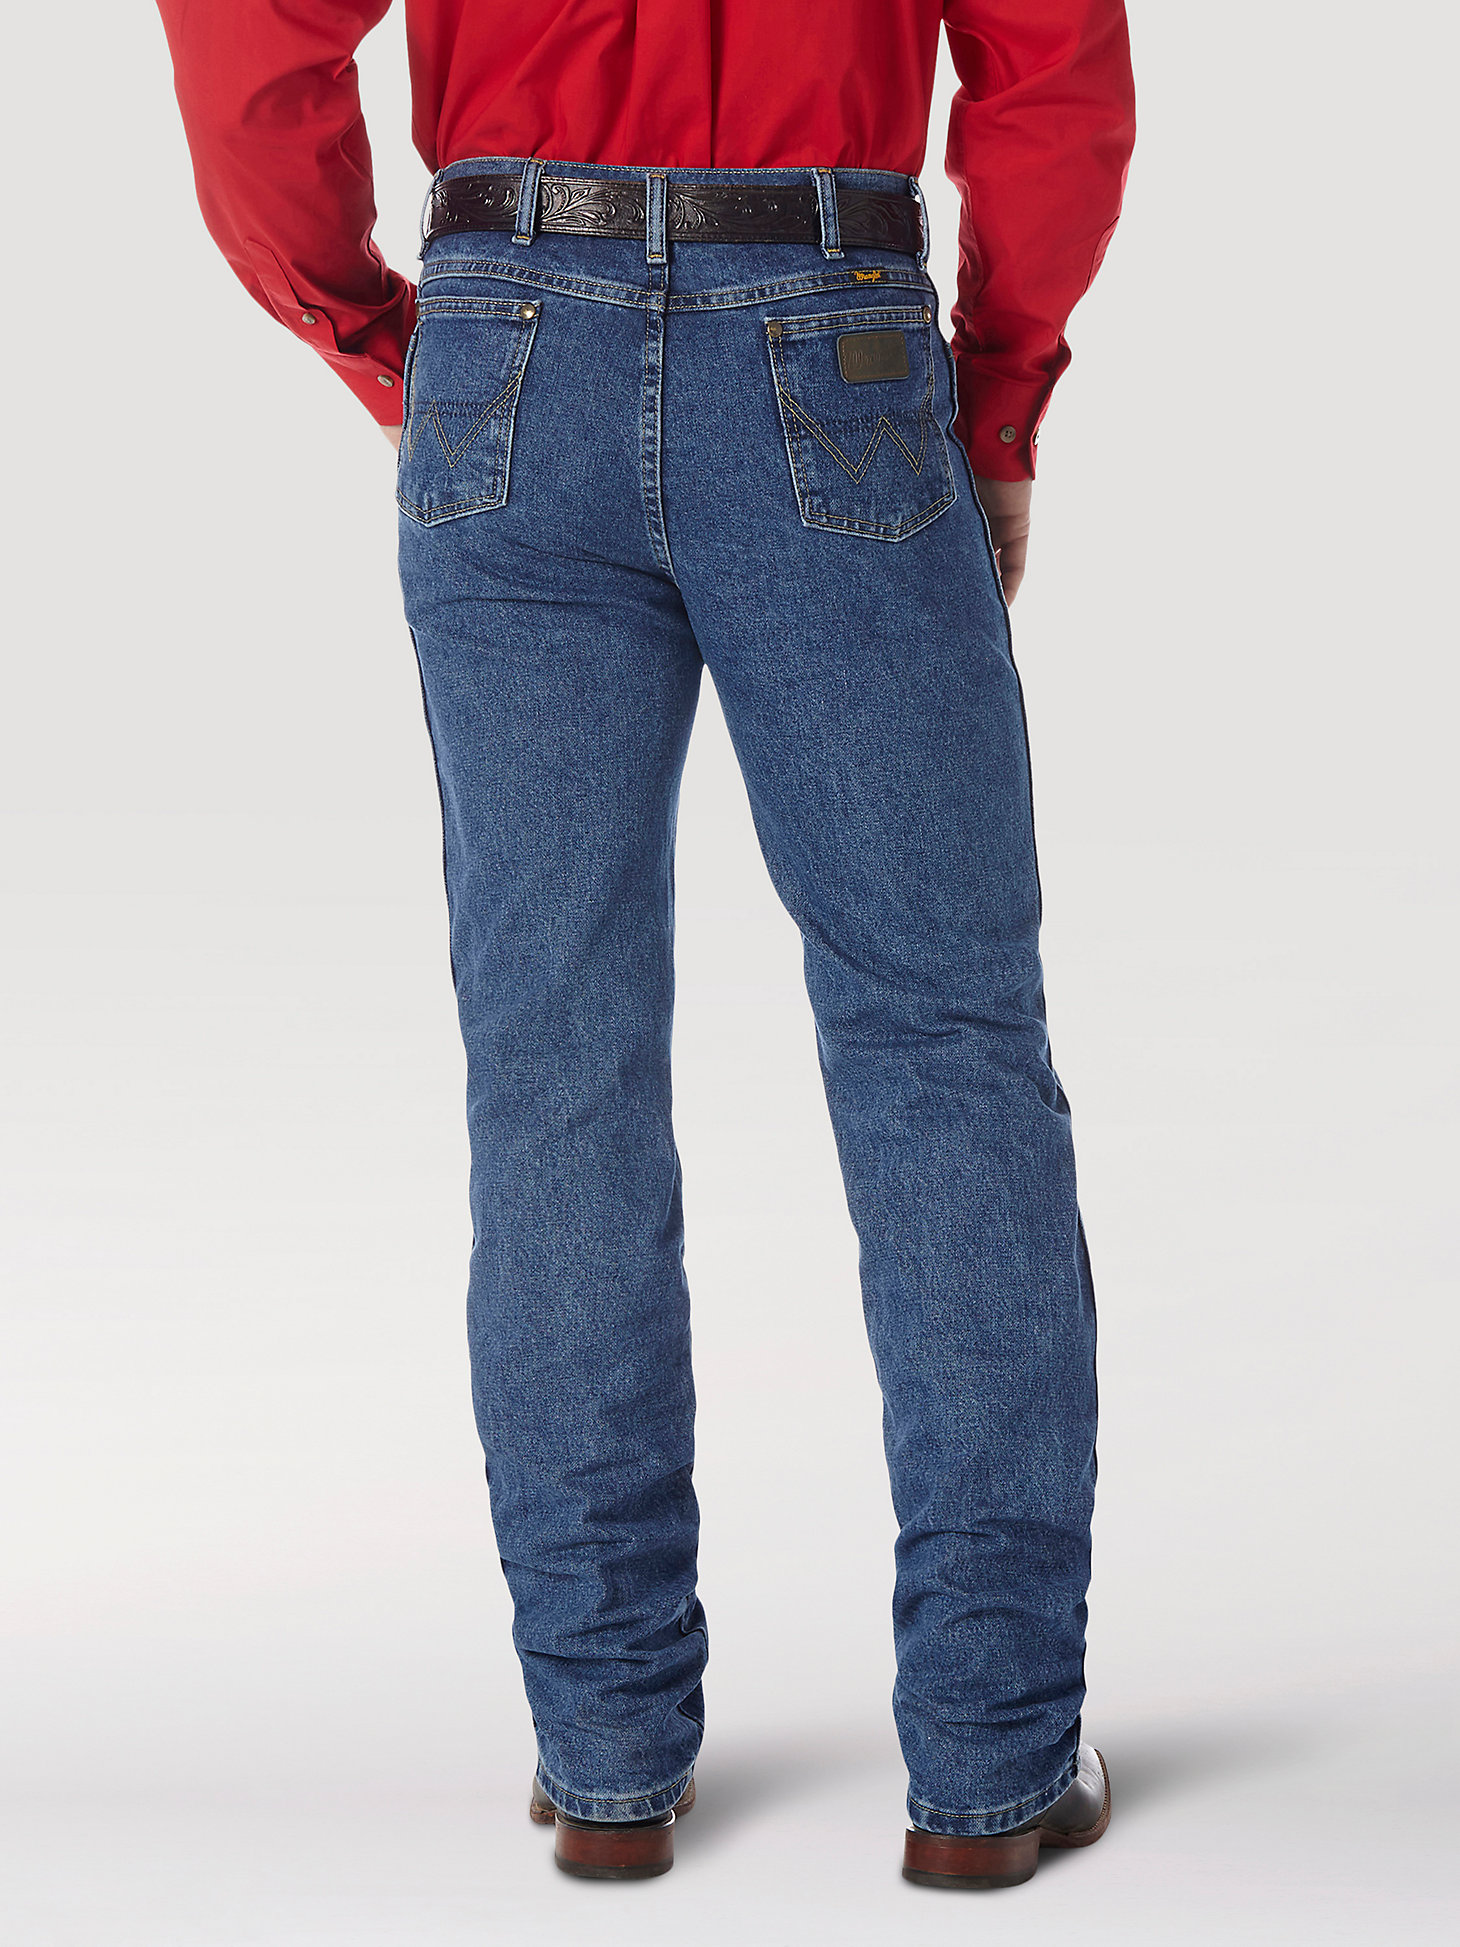 George Strait Cowboy Cut® Slim Fit Jean in Heavyweight Stone Denim alternative view 2